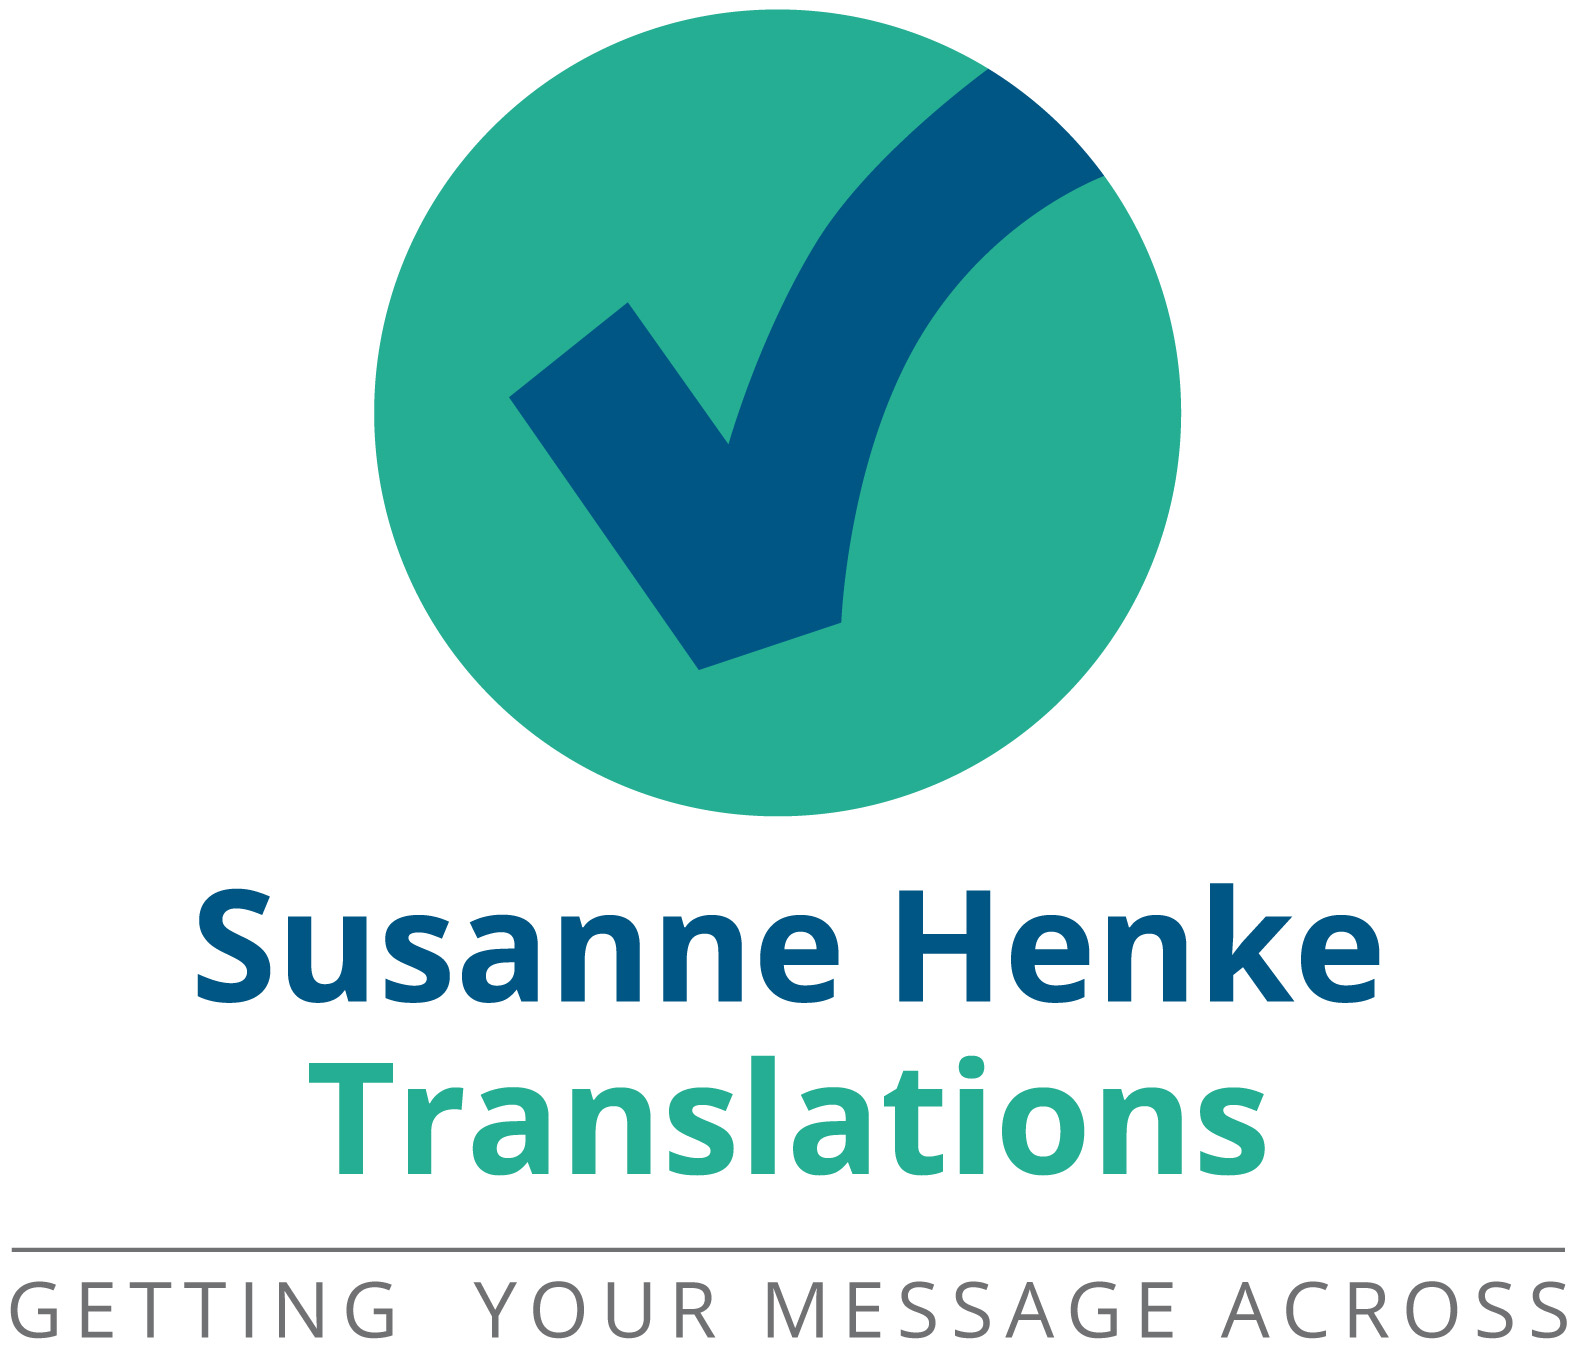 SUSANNE HENKE TRANSLATIONS